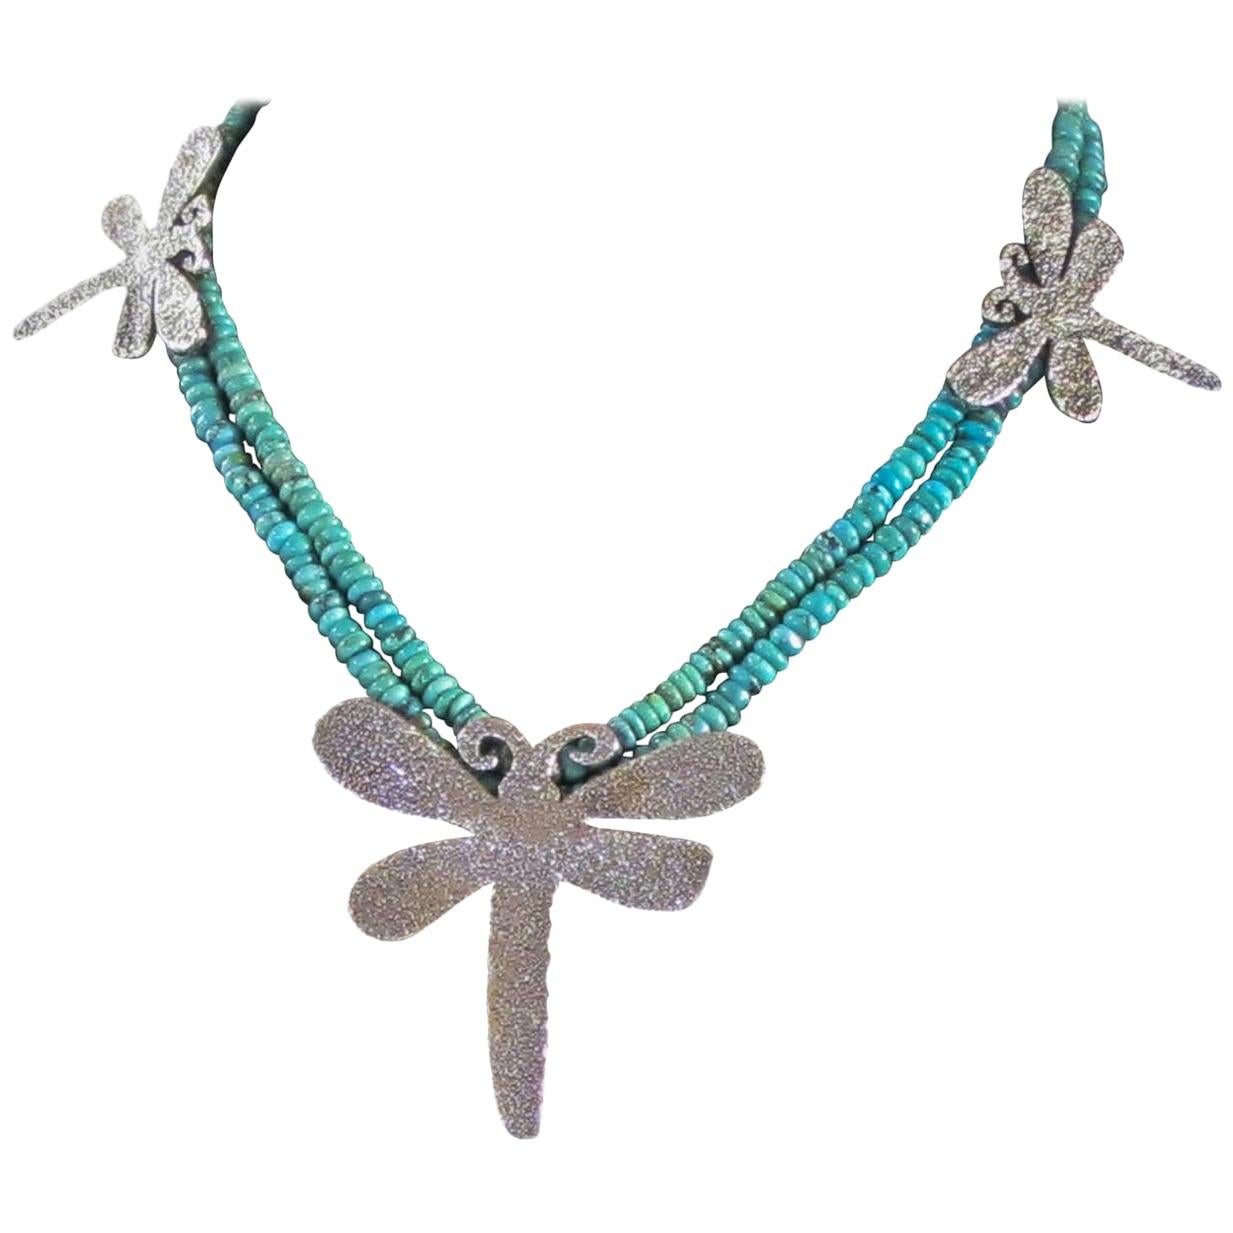 Dragonfly necklace, cast silver Kingman turquoise beads Melanie Yazzie Navajo